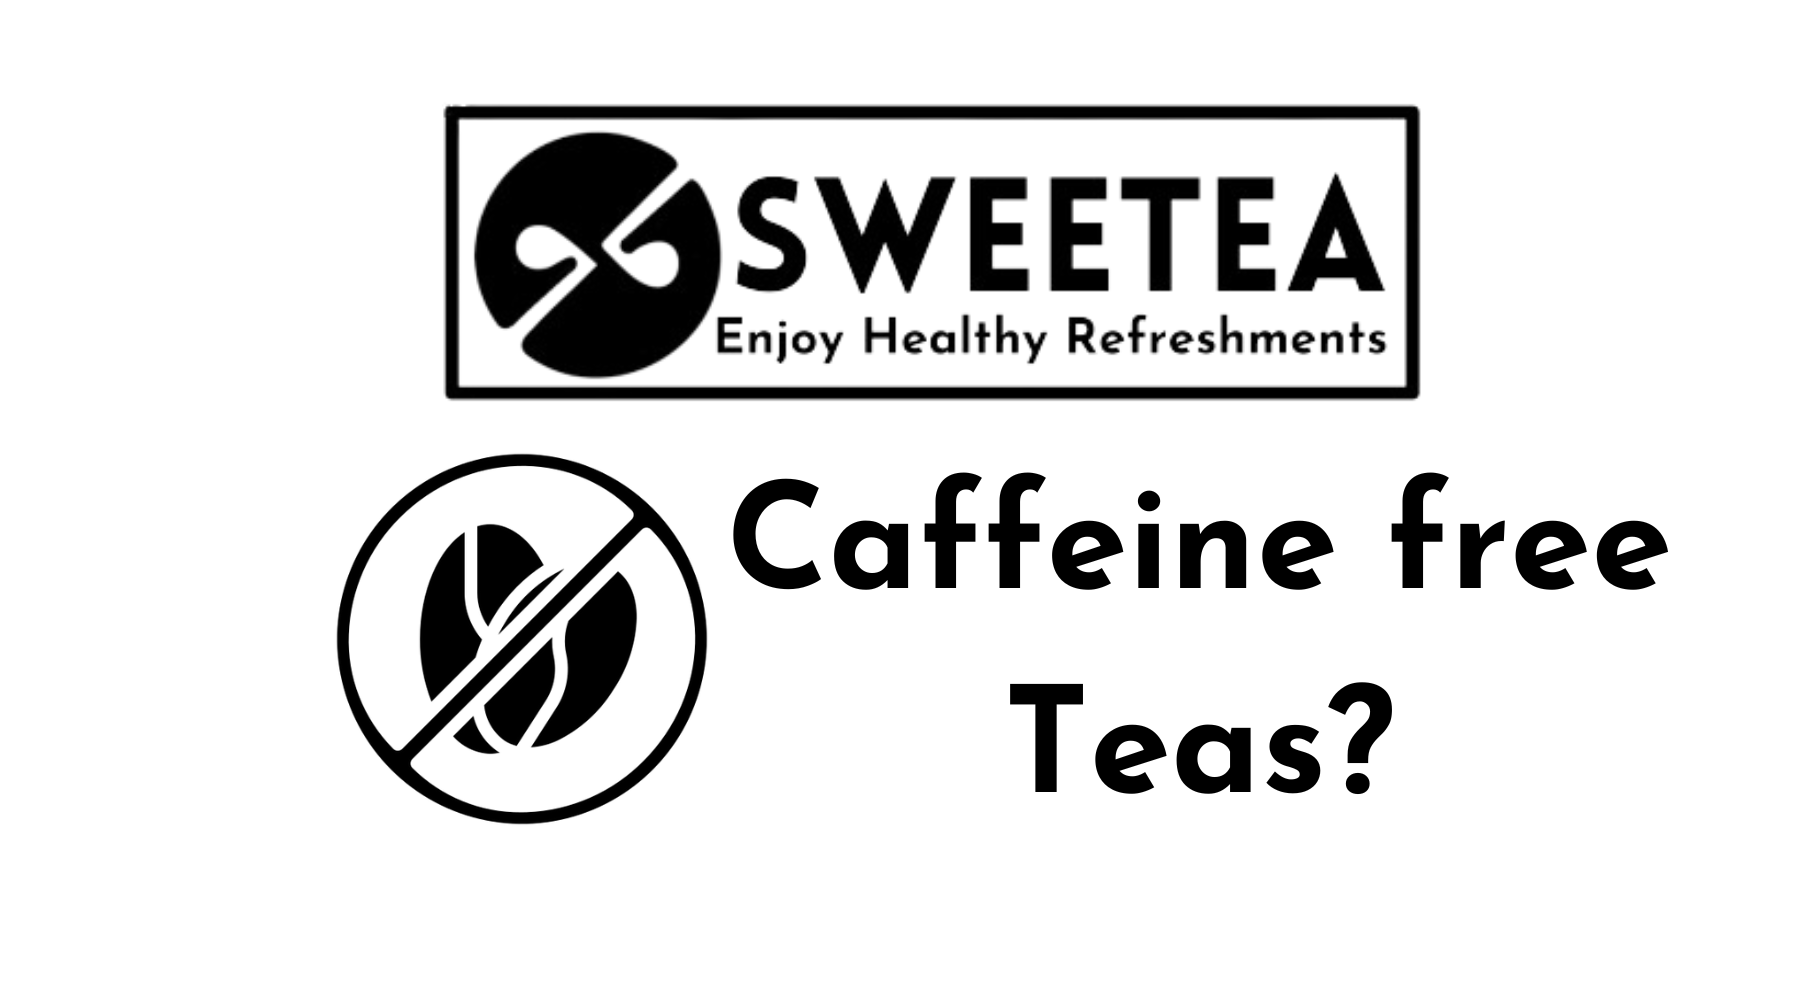 Sweetea Caffeine Free Herbal Teas: Why Choose Them?